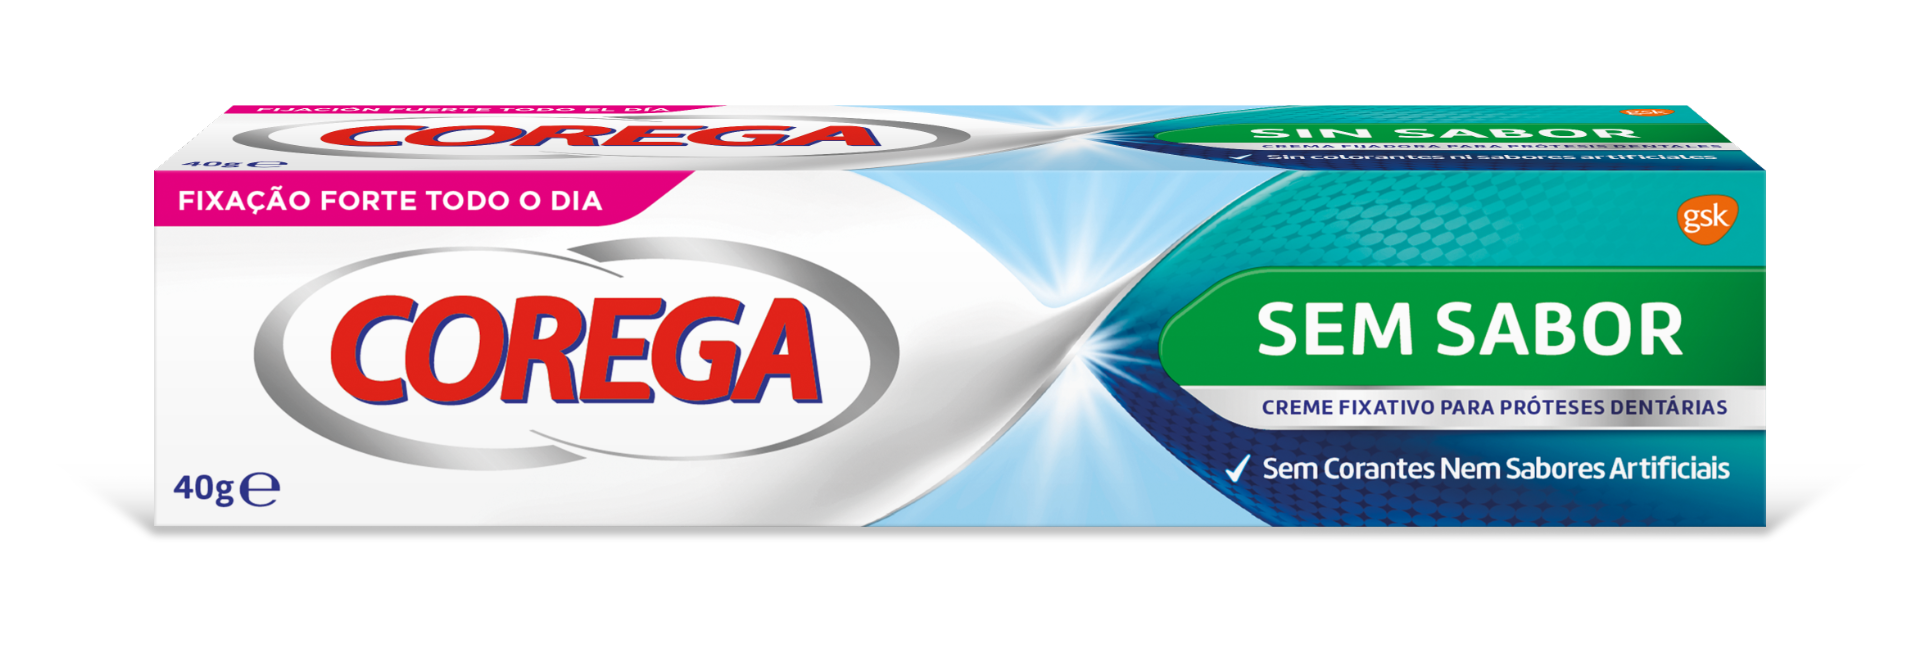 Corega Unflavored Prosthesis Fixer Cream - 40g (Special Price)